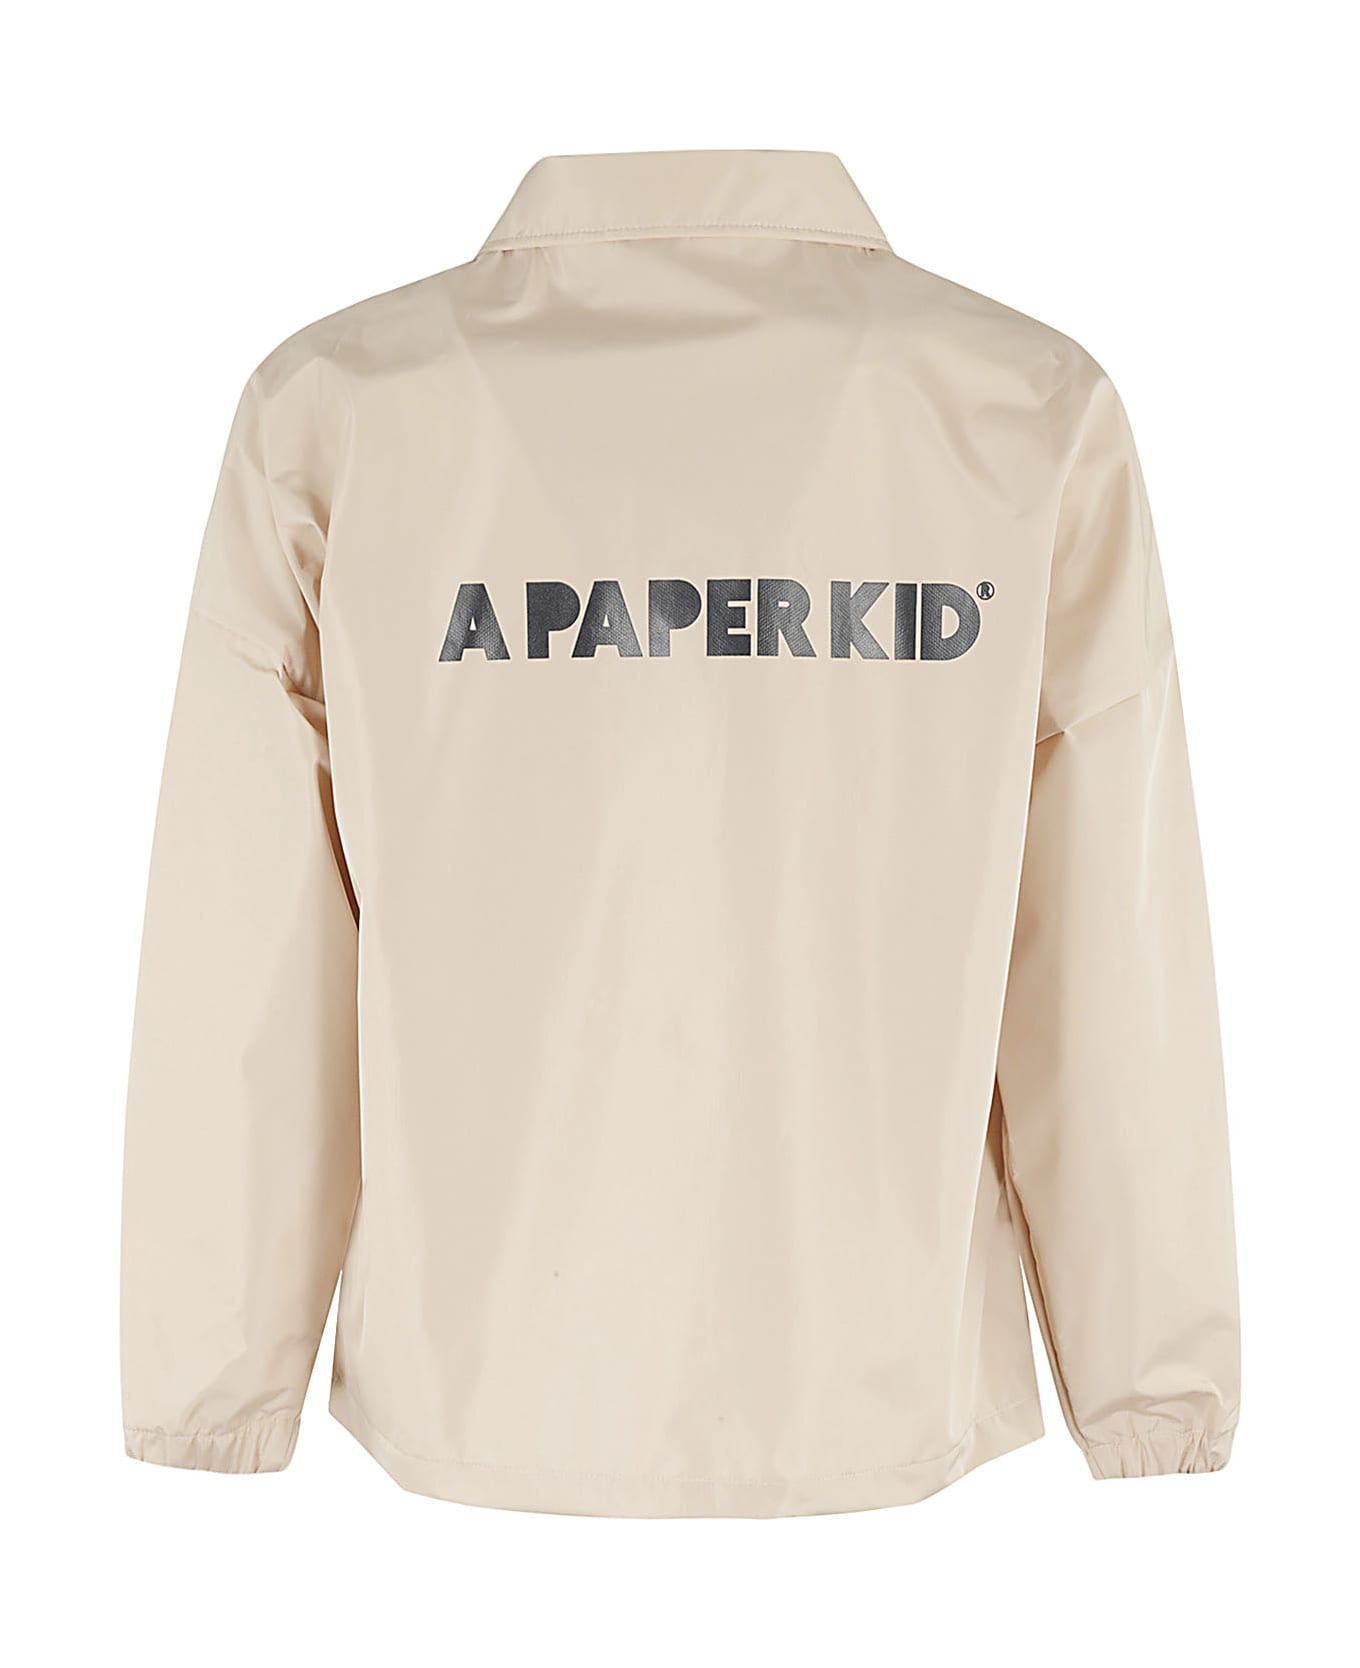 A Paper Kid Nylon Jacket - Sabbia ジャケット